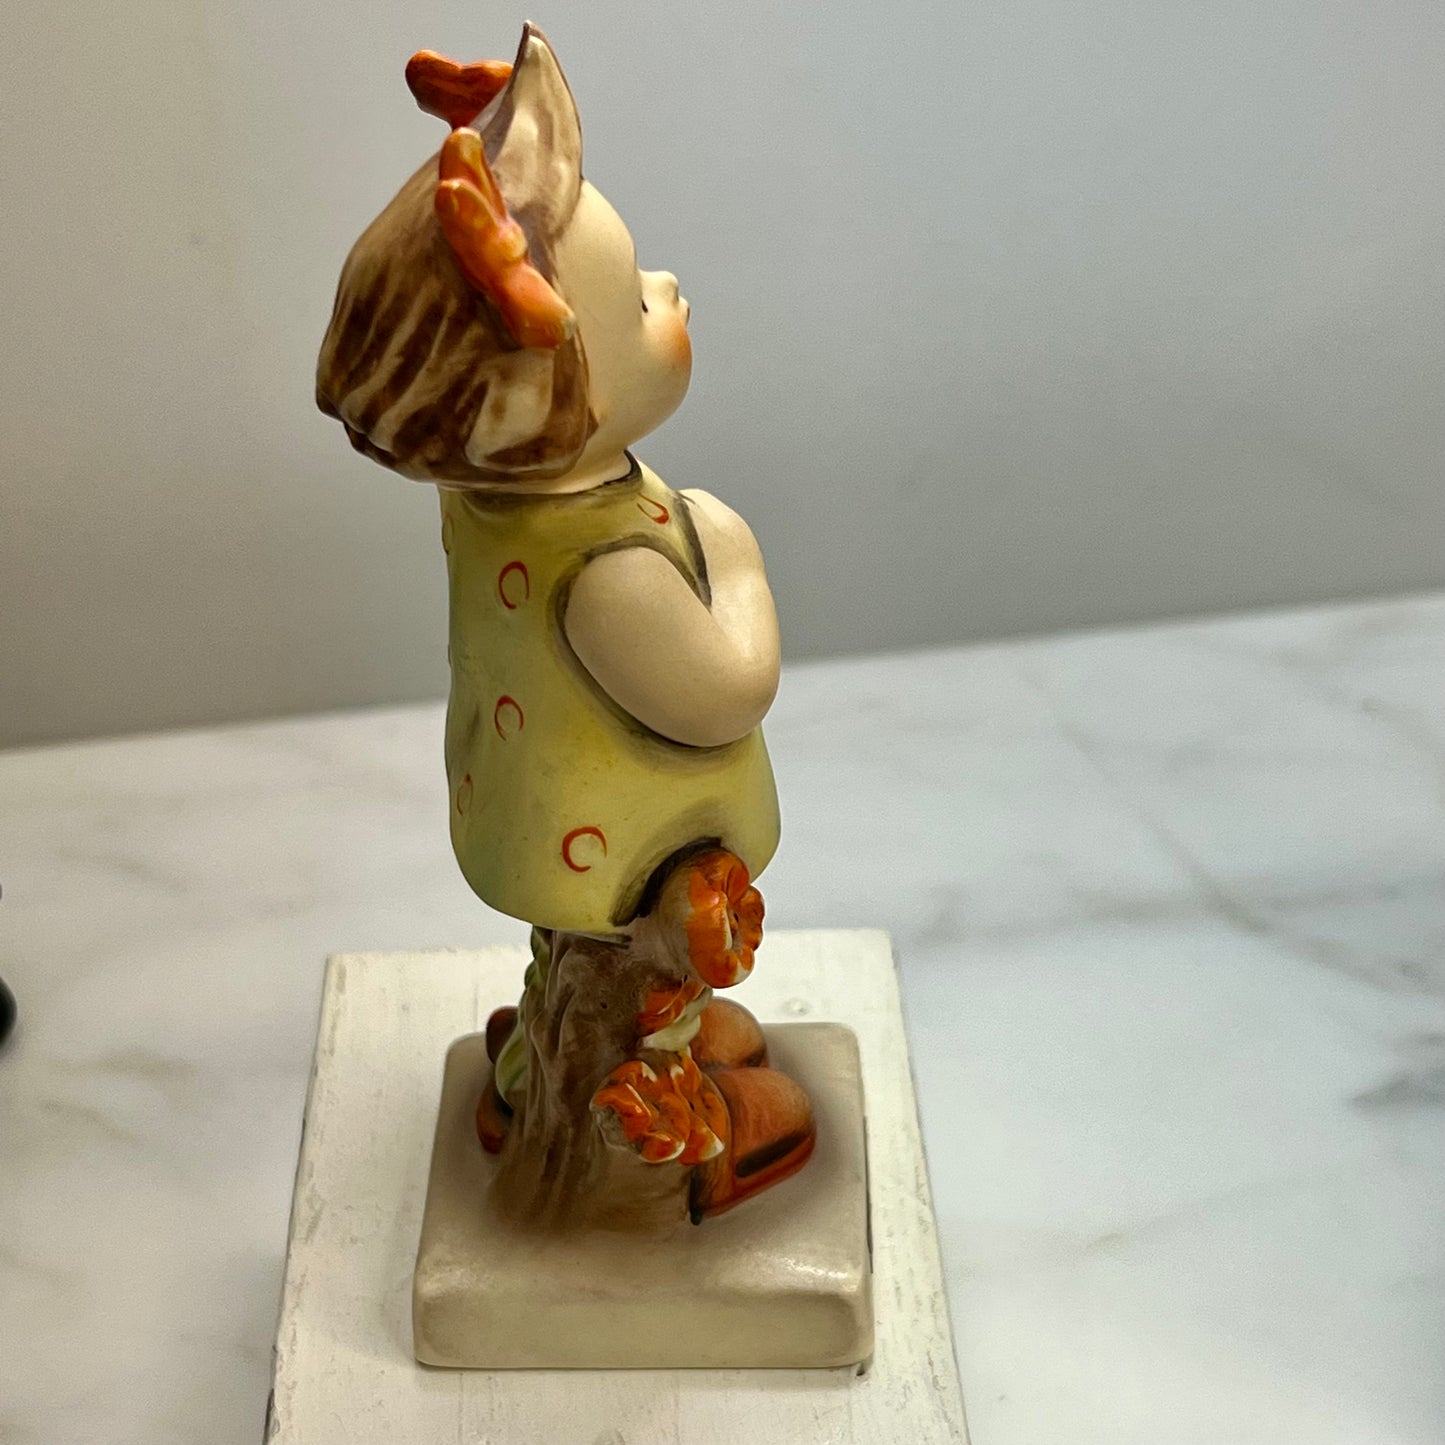 Vintage Hummel "Spring Cheer" Figurine HUM 72 TM 3